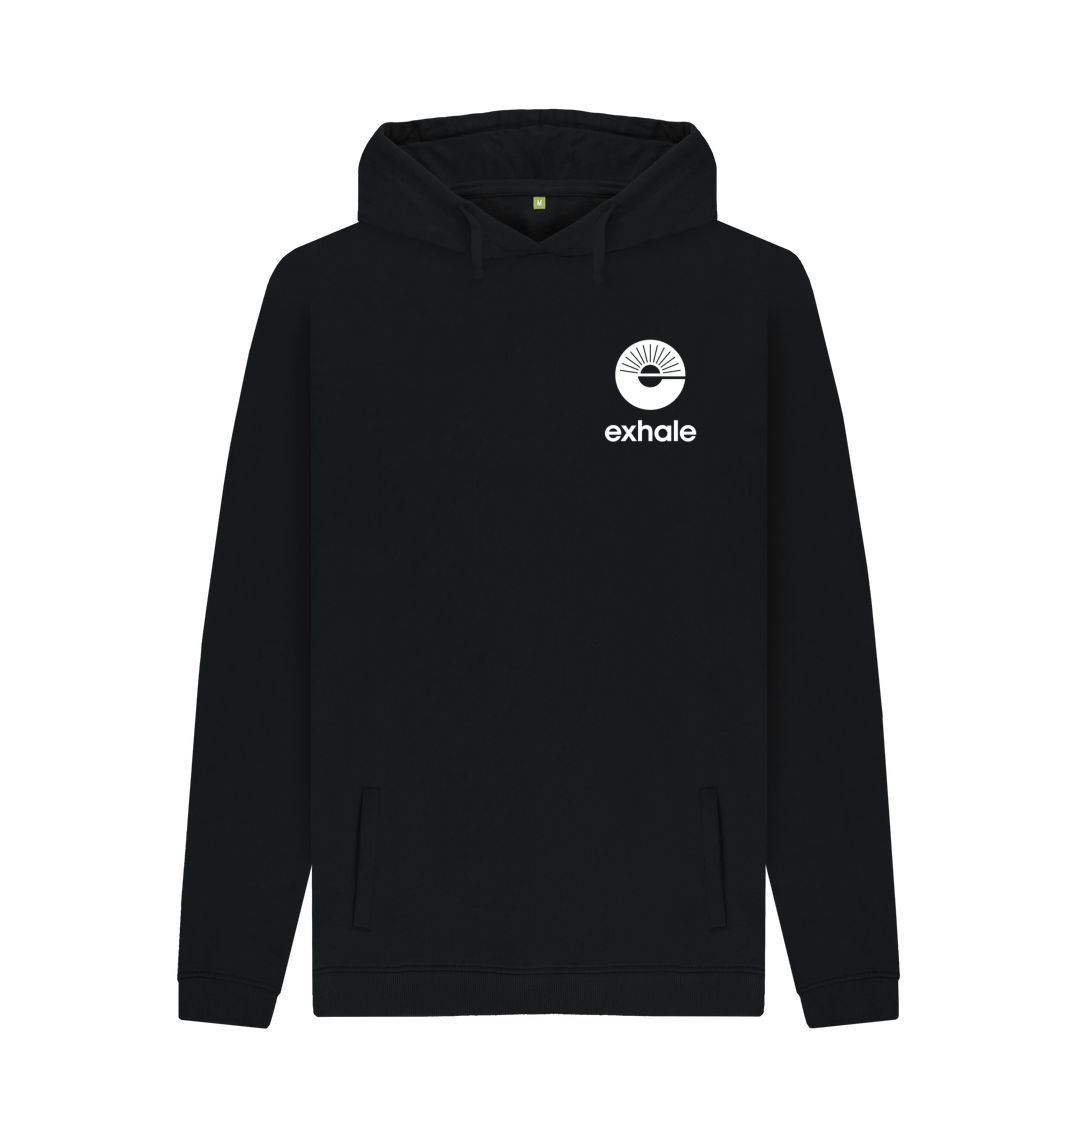 Black Exhale white logo on a black hoodie